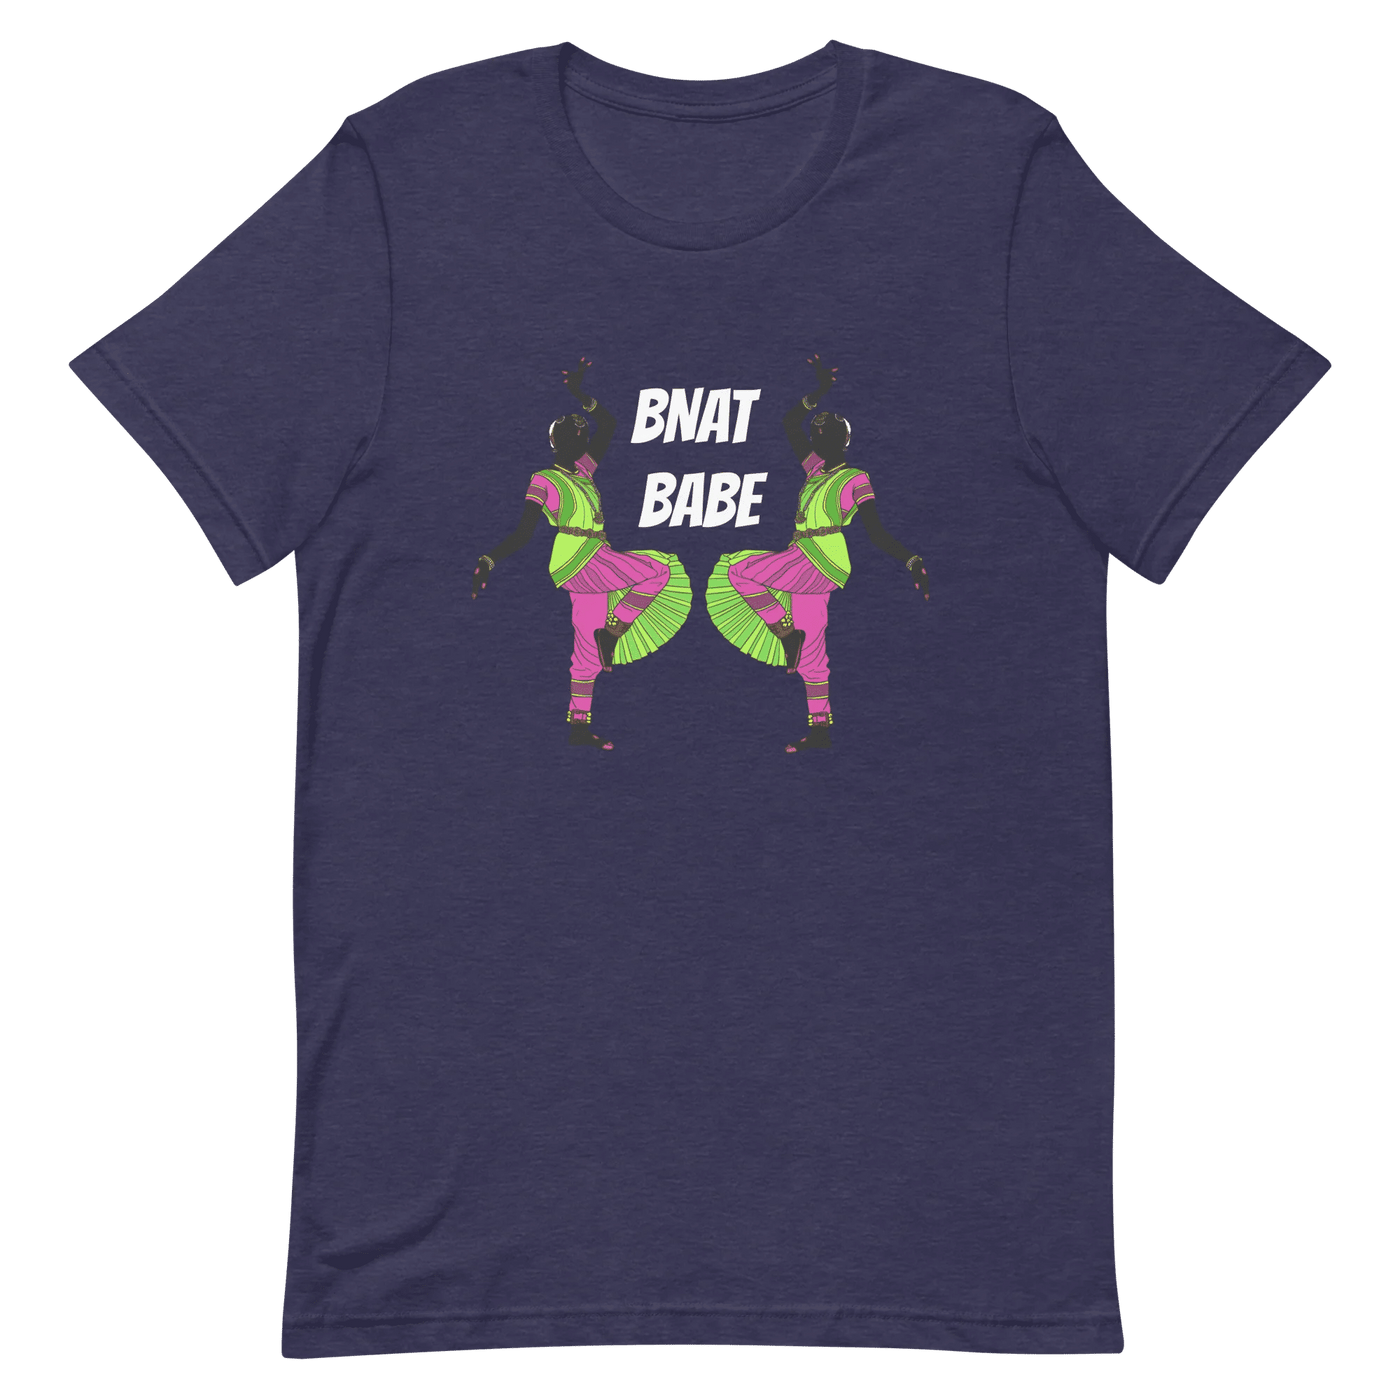 BNat Babe - Short-Sleeve Unisex T-Shirt